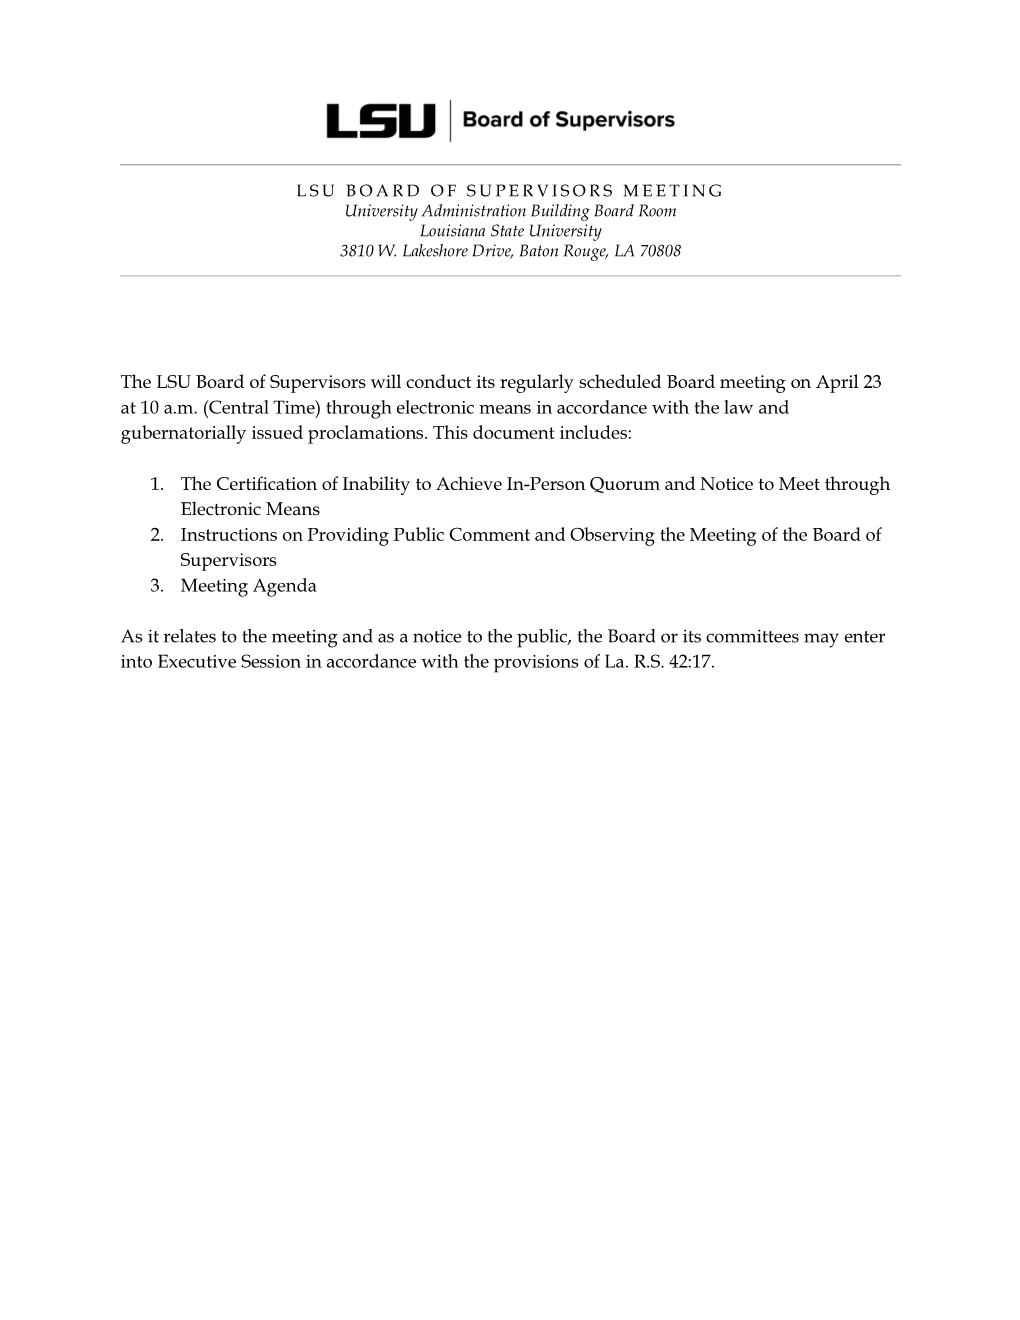 LSU Board of Supervisors Meeting Agenda